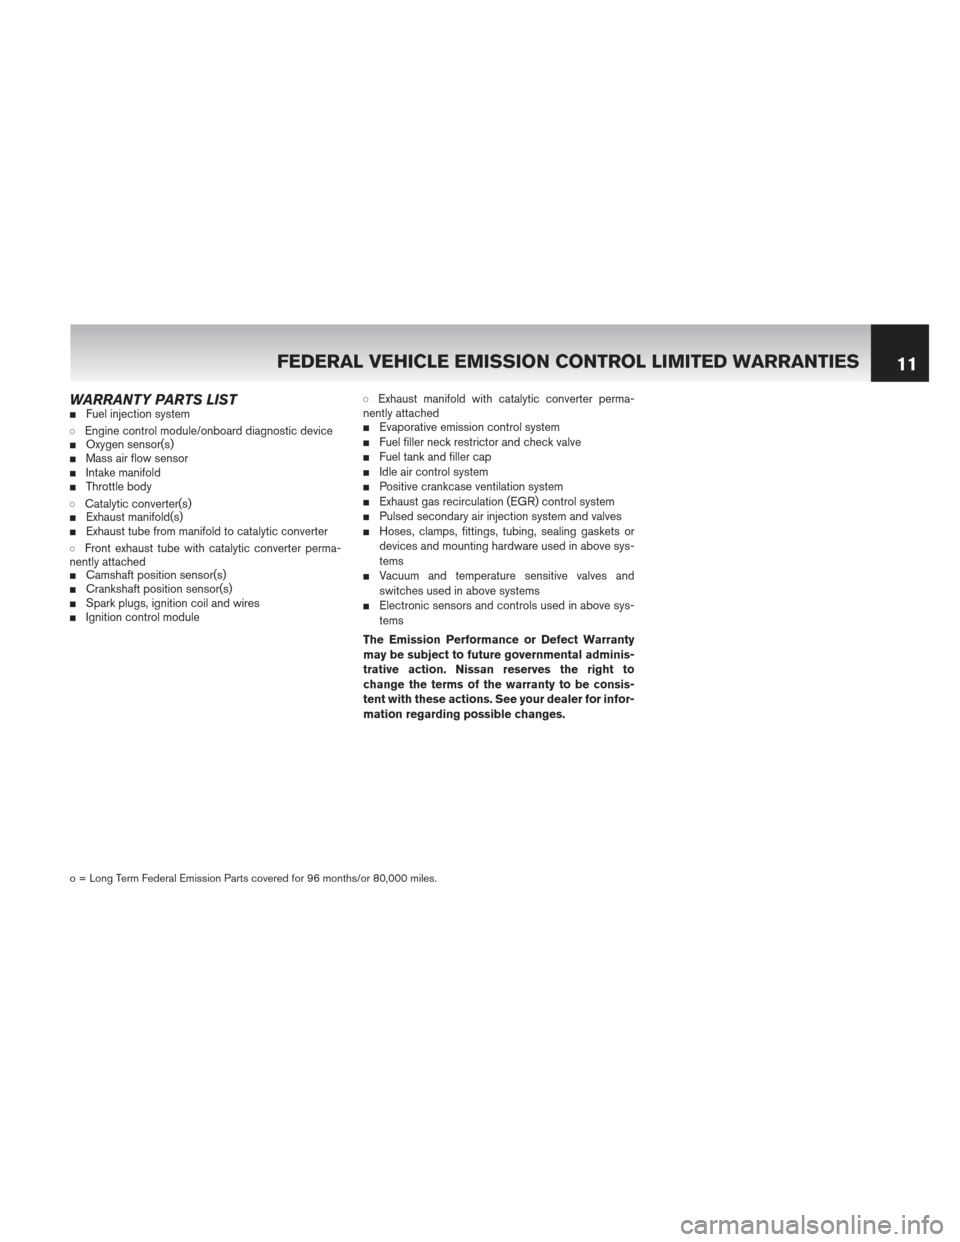 NISSAN ALTIMA 2013 L33 / 5.G Warranty Booklet WARRANTY PARTS LISTFuel injection system
Engine control module/onboard diagnostic deviceOxygen sensor(s)Mass air flow sensorIntake manifoldThrottle body
Catalytic converter(s)Exhaust manifold(